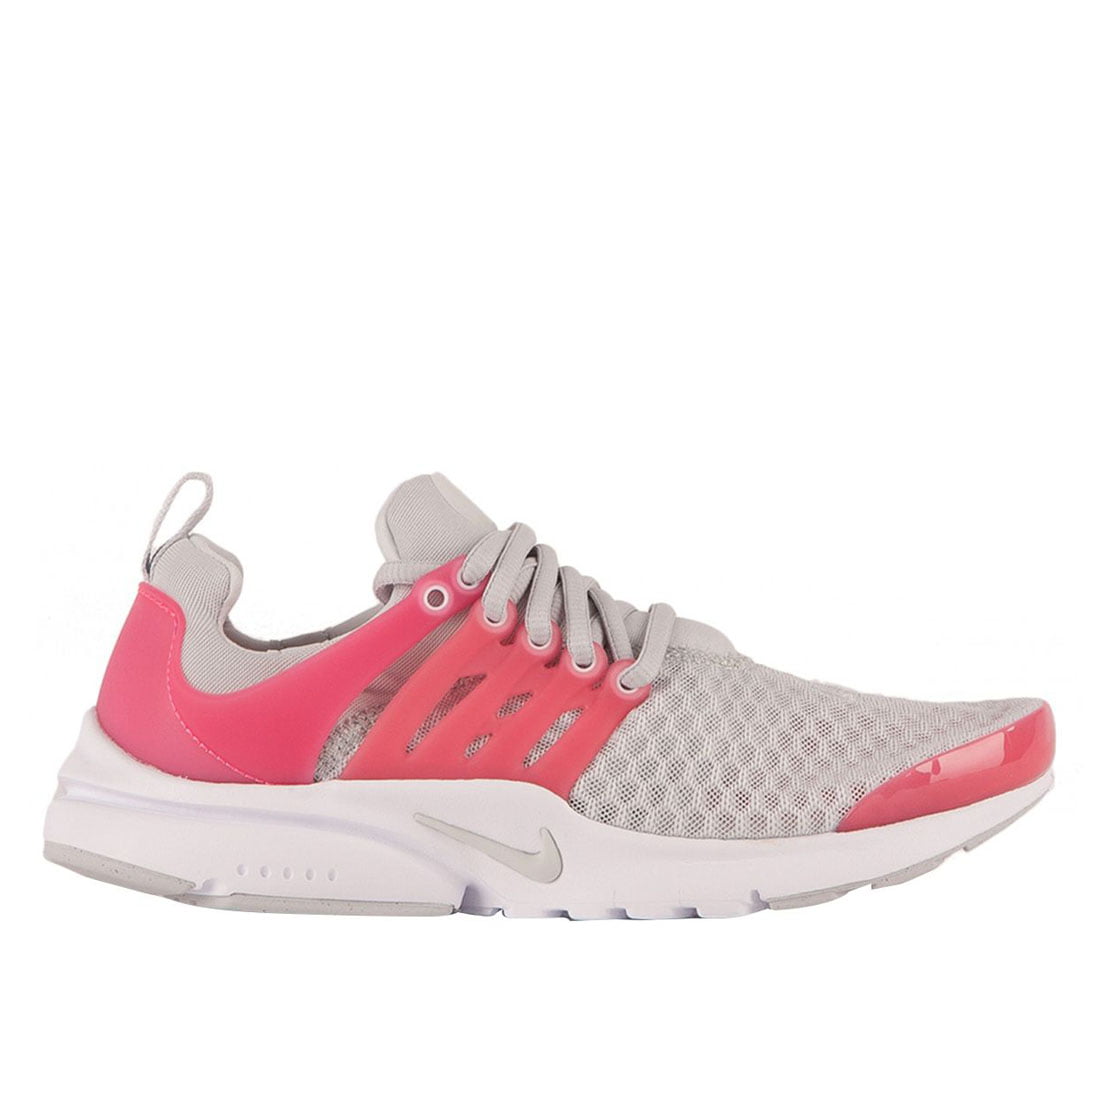 Nike BR Men/Adult shoe size 6 Casual 832251-001 Pink - Walmart.com